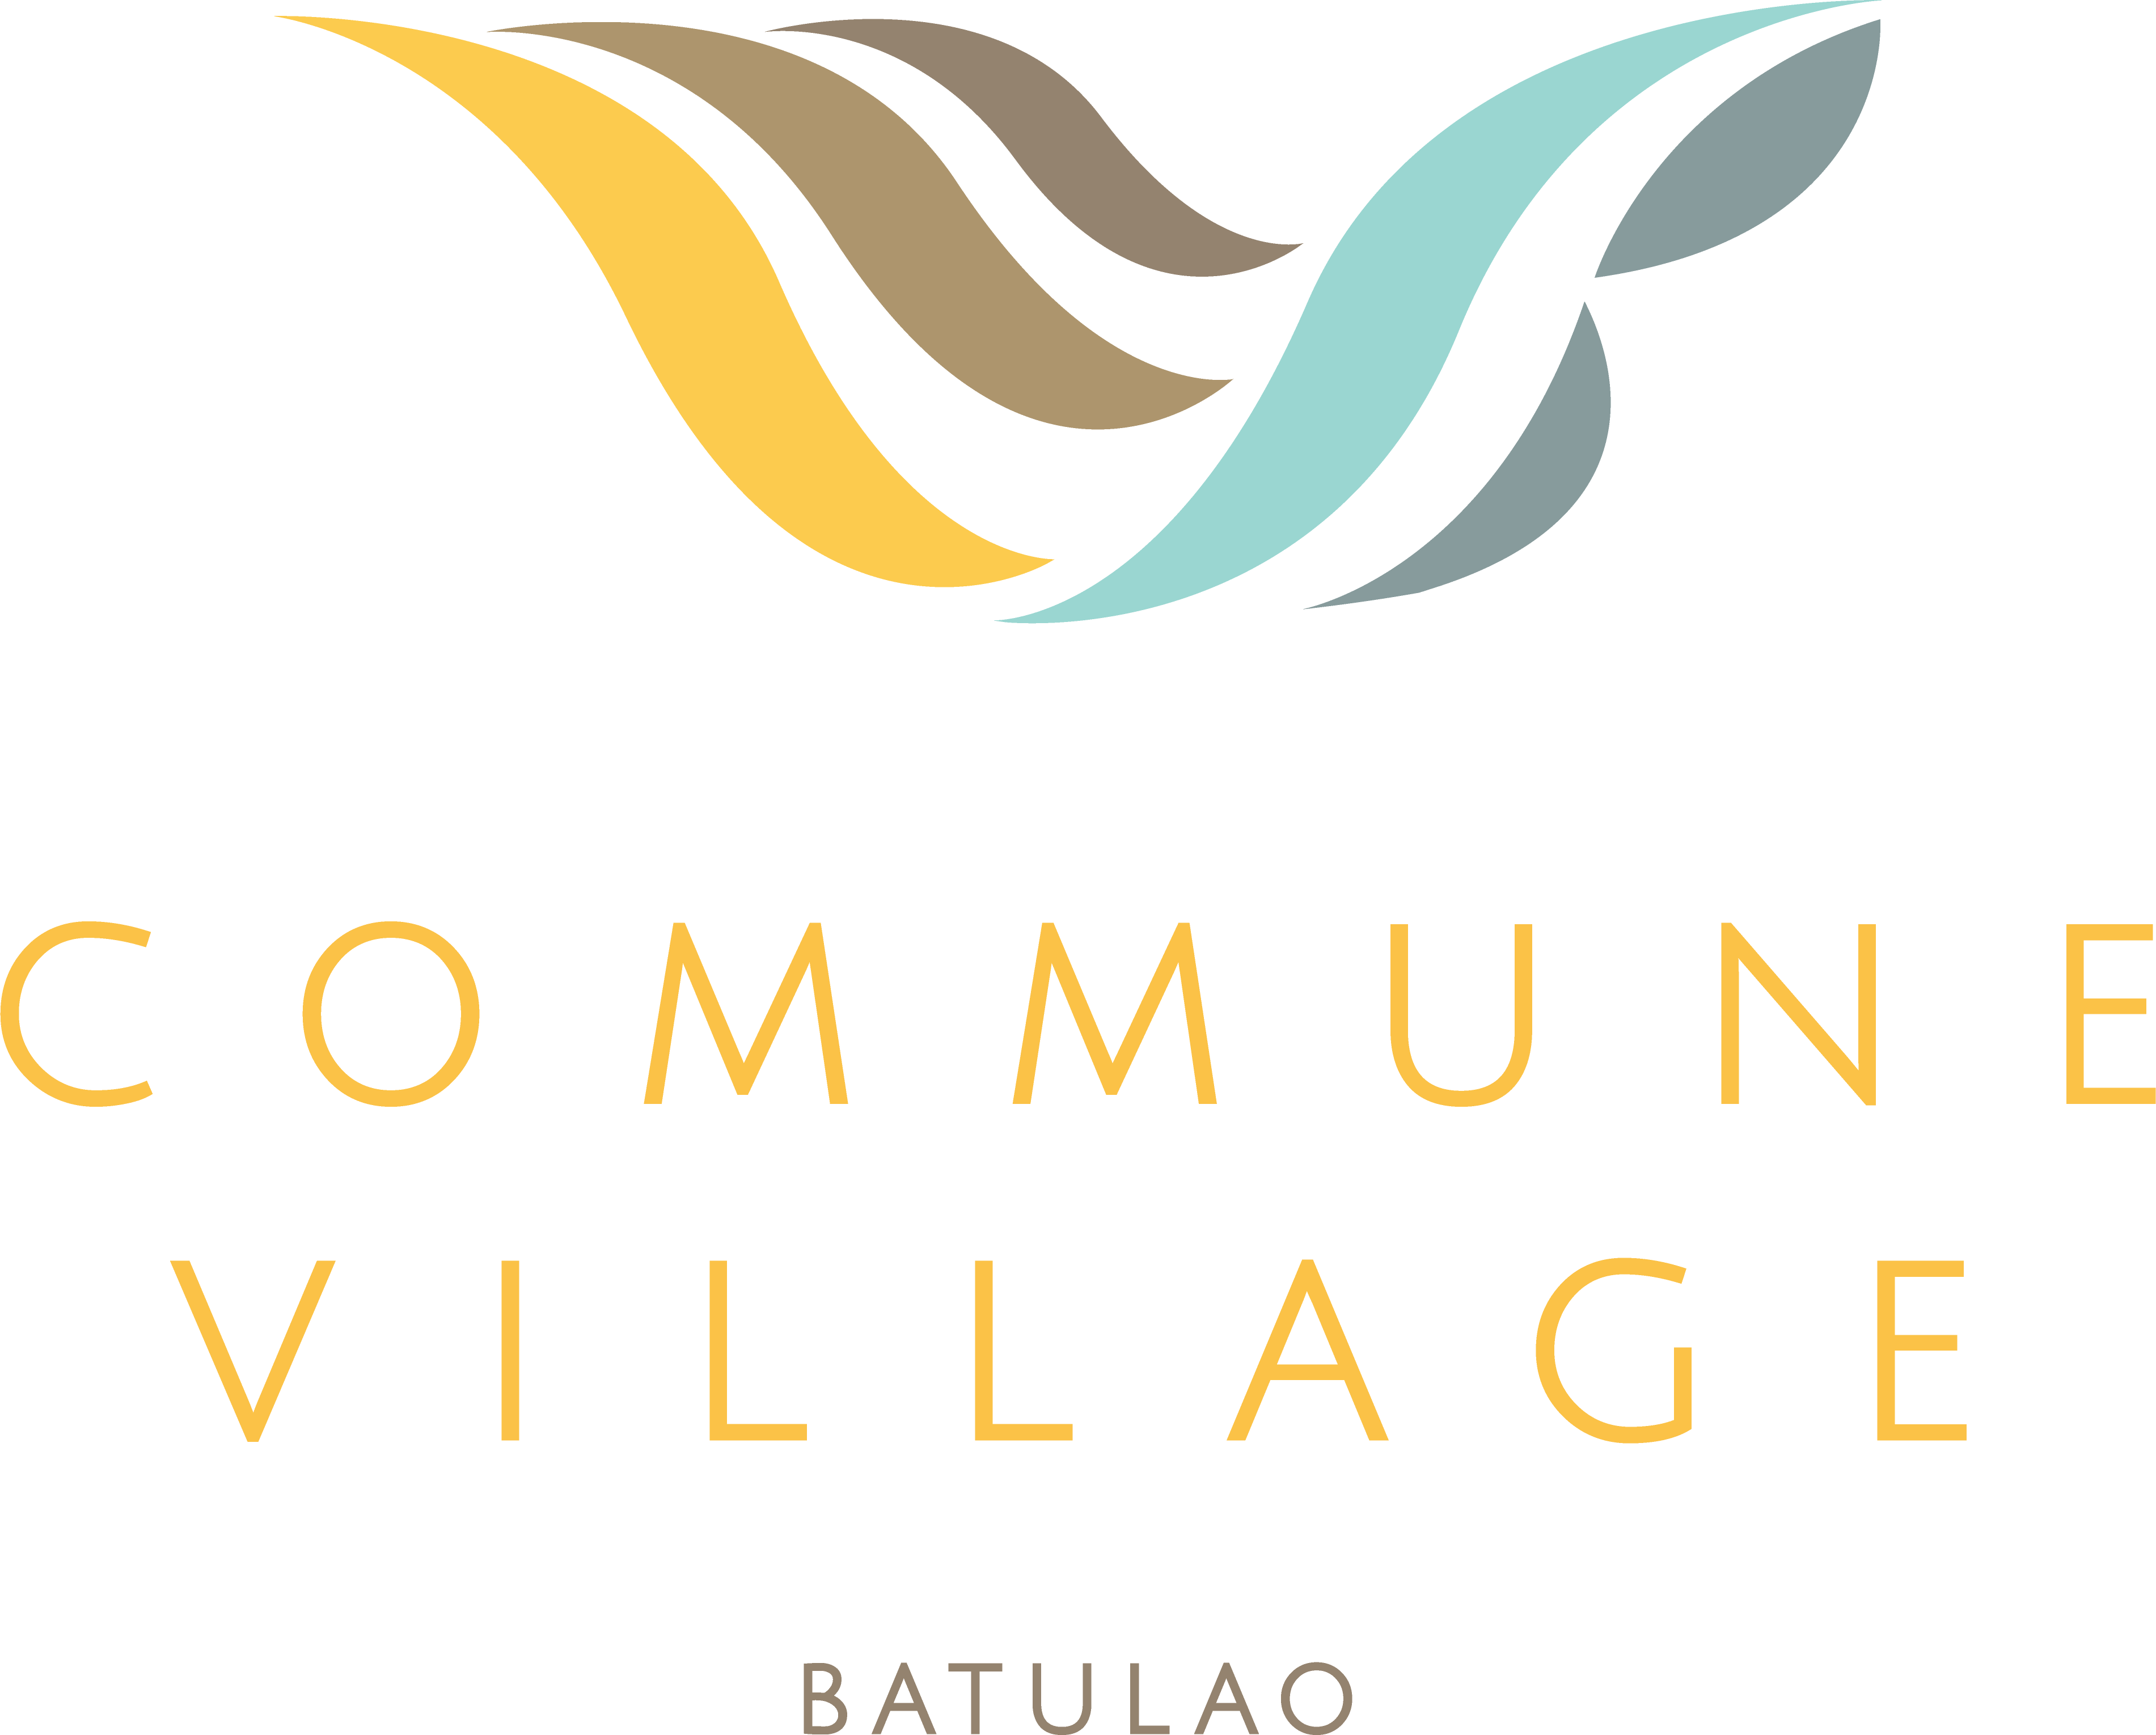 Commune Village Batulao Logo